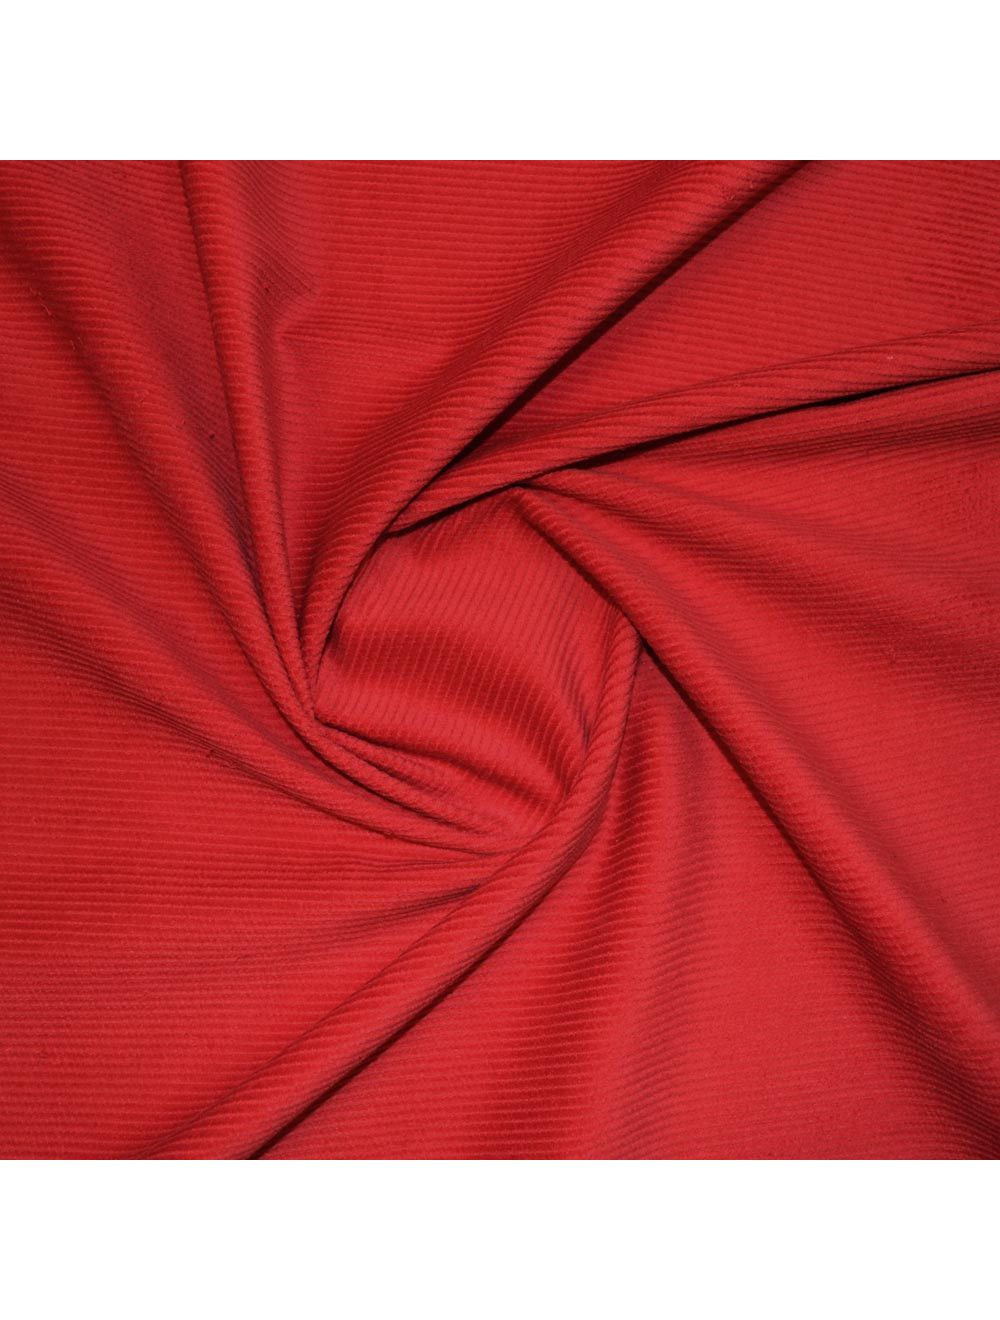 Red 8 Wale Corduroy Fabric | Corduroy Fabric | Calico Laine